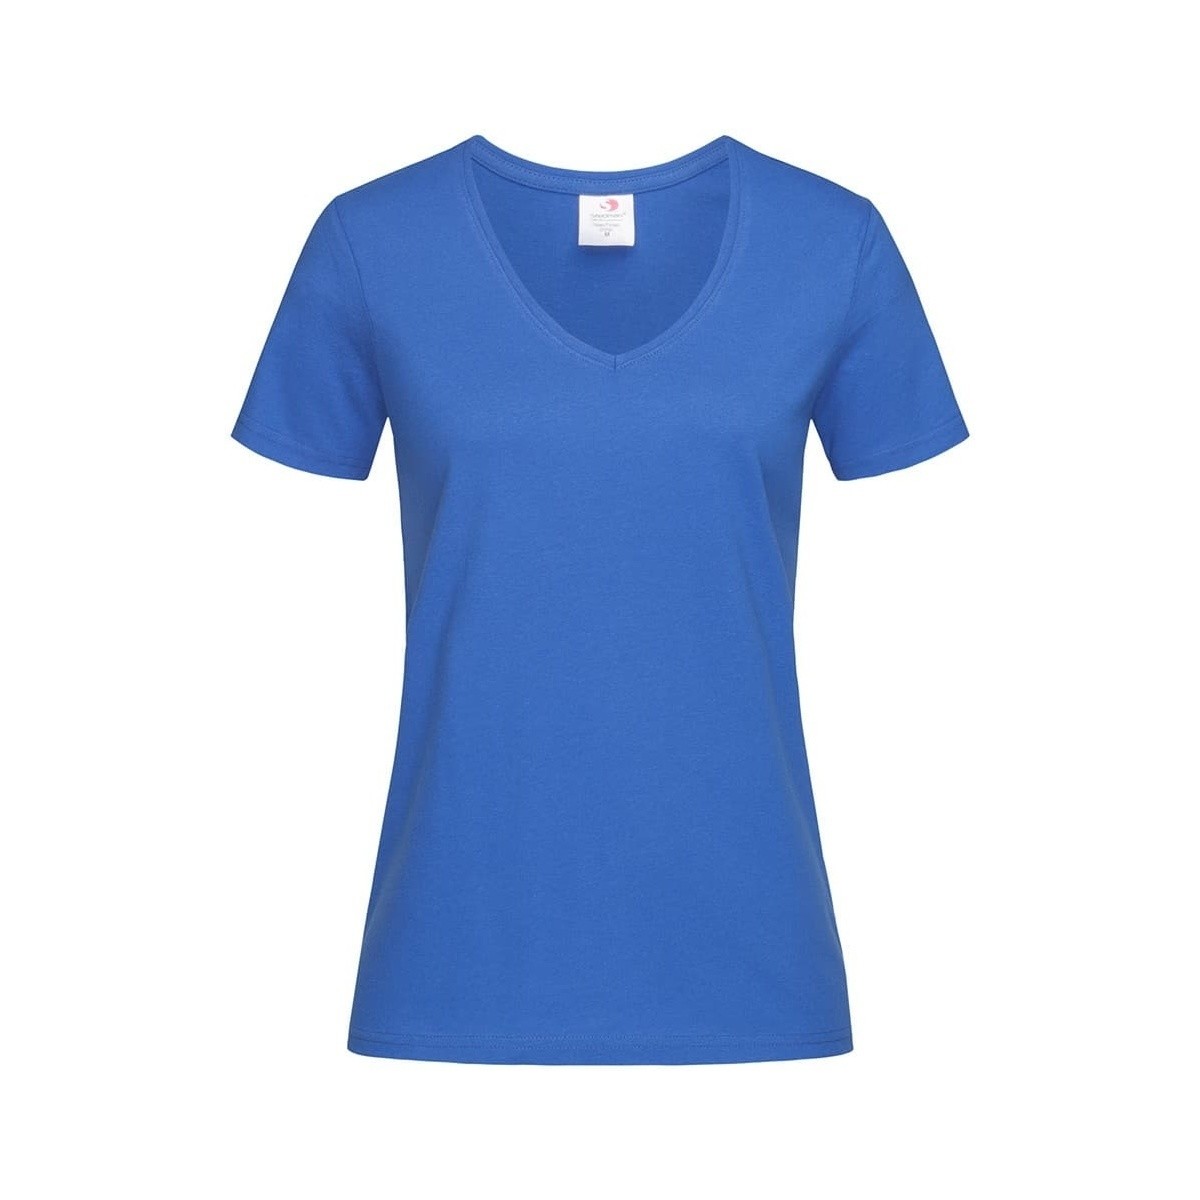 textil Mujer Camisetas manga larga Stedman AB279 Azul